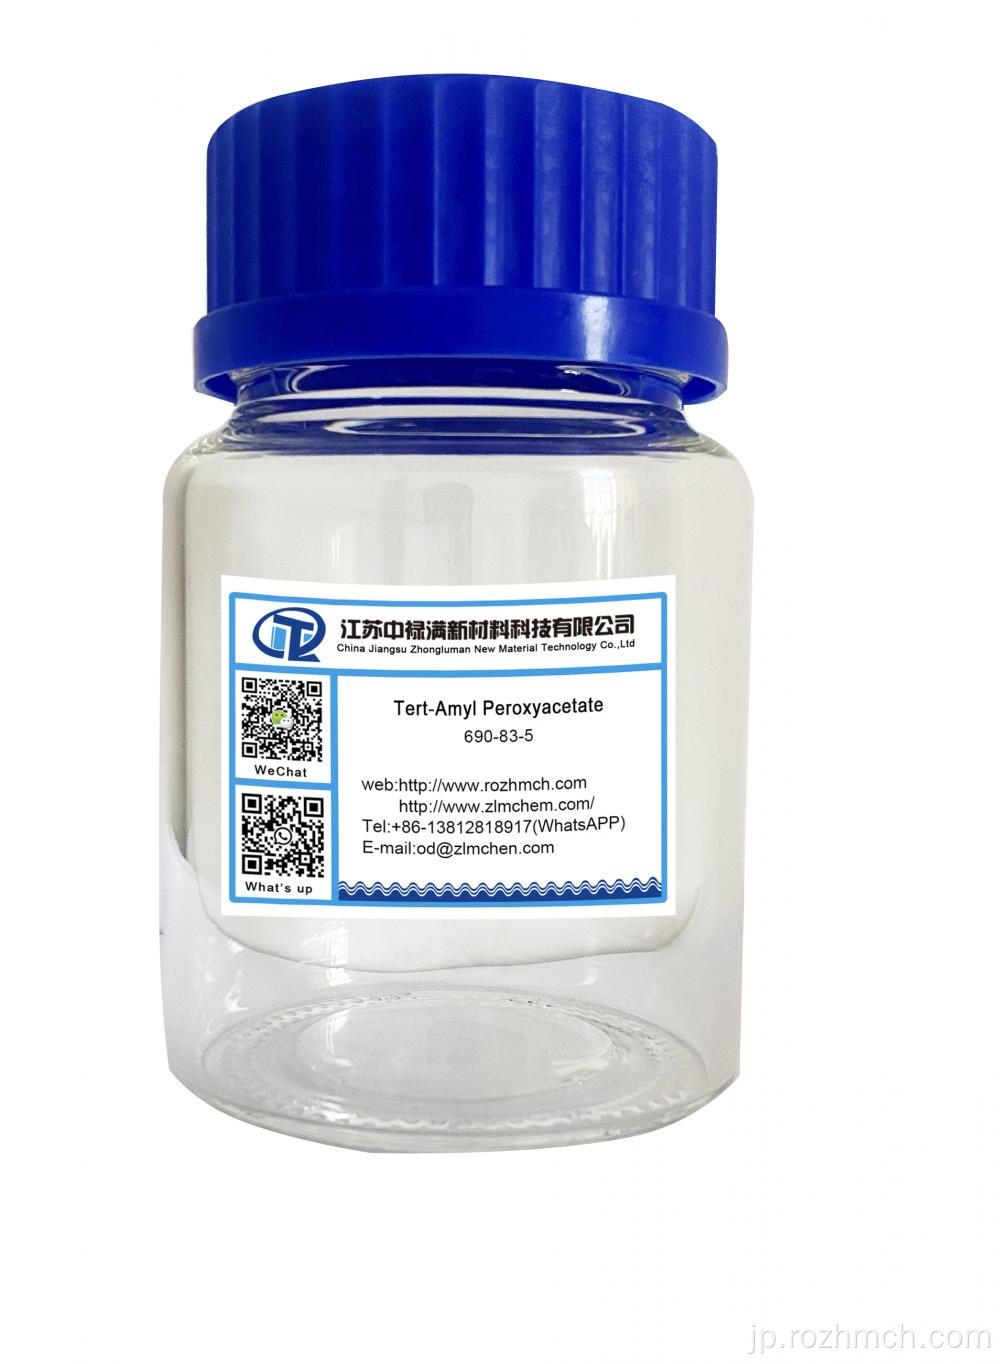 Tert-Amyl Peroxyacetate CAS 690-83-5